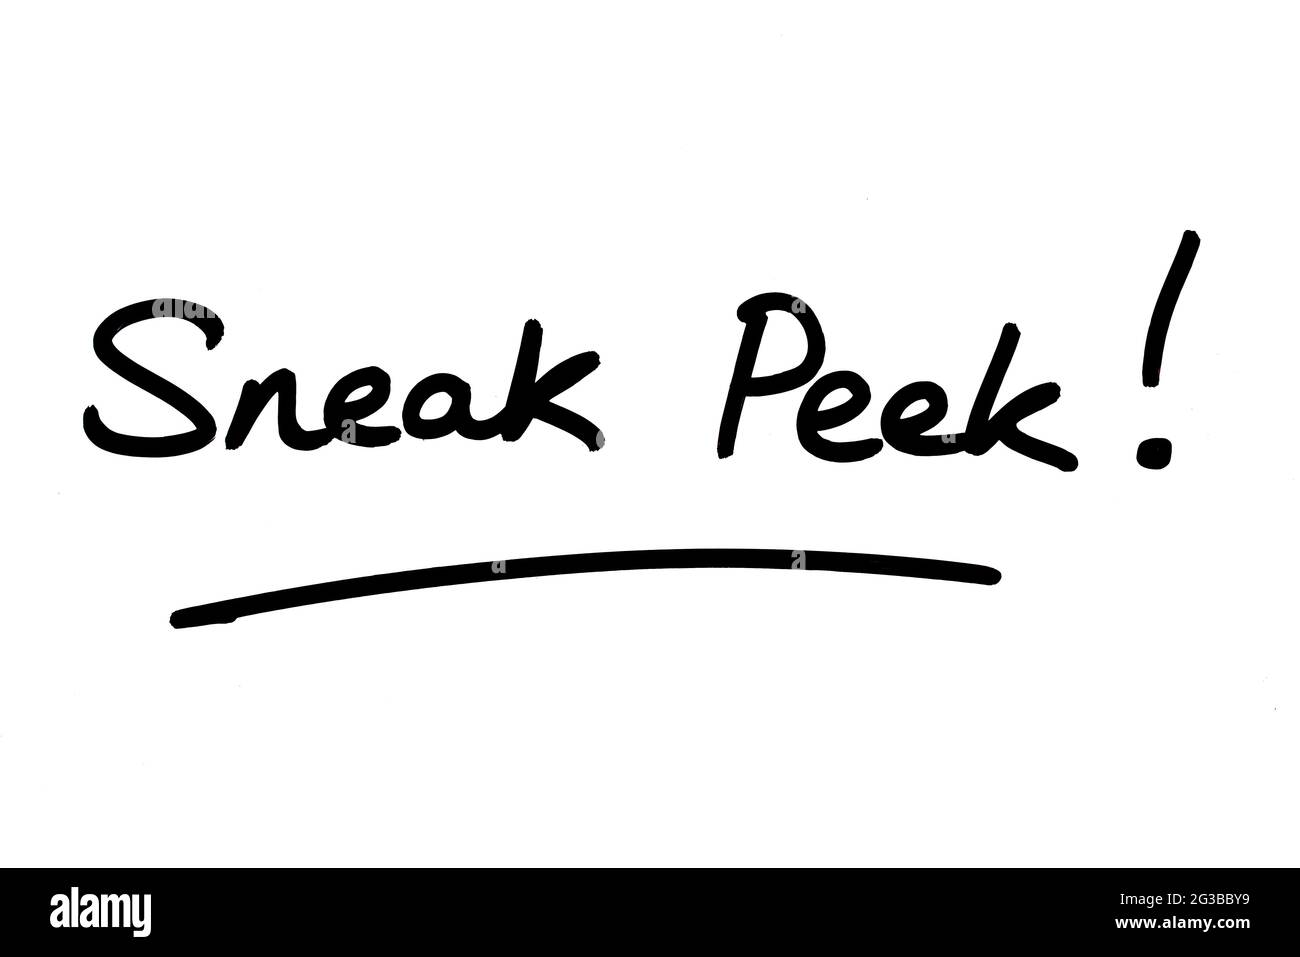 Sneak Peek! handwritten on a white background. Stock Photo